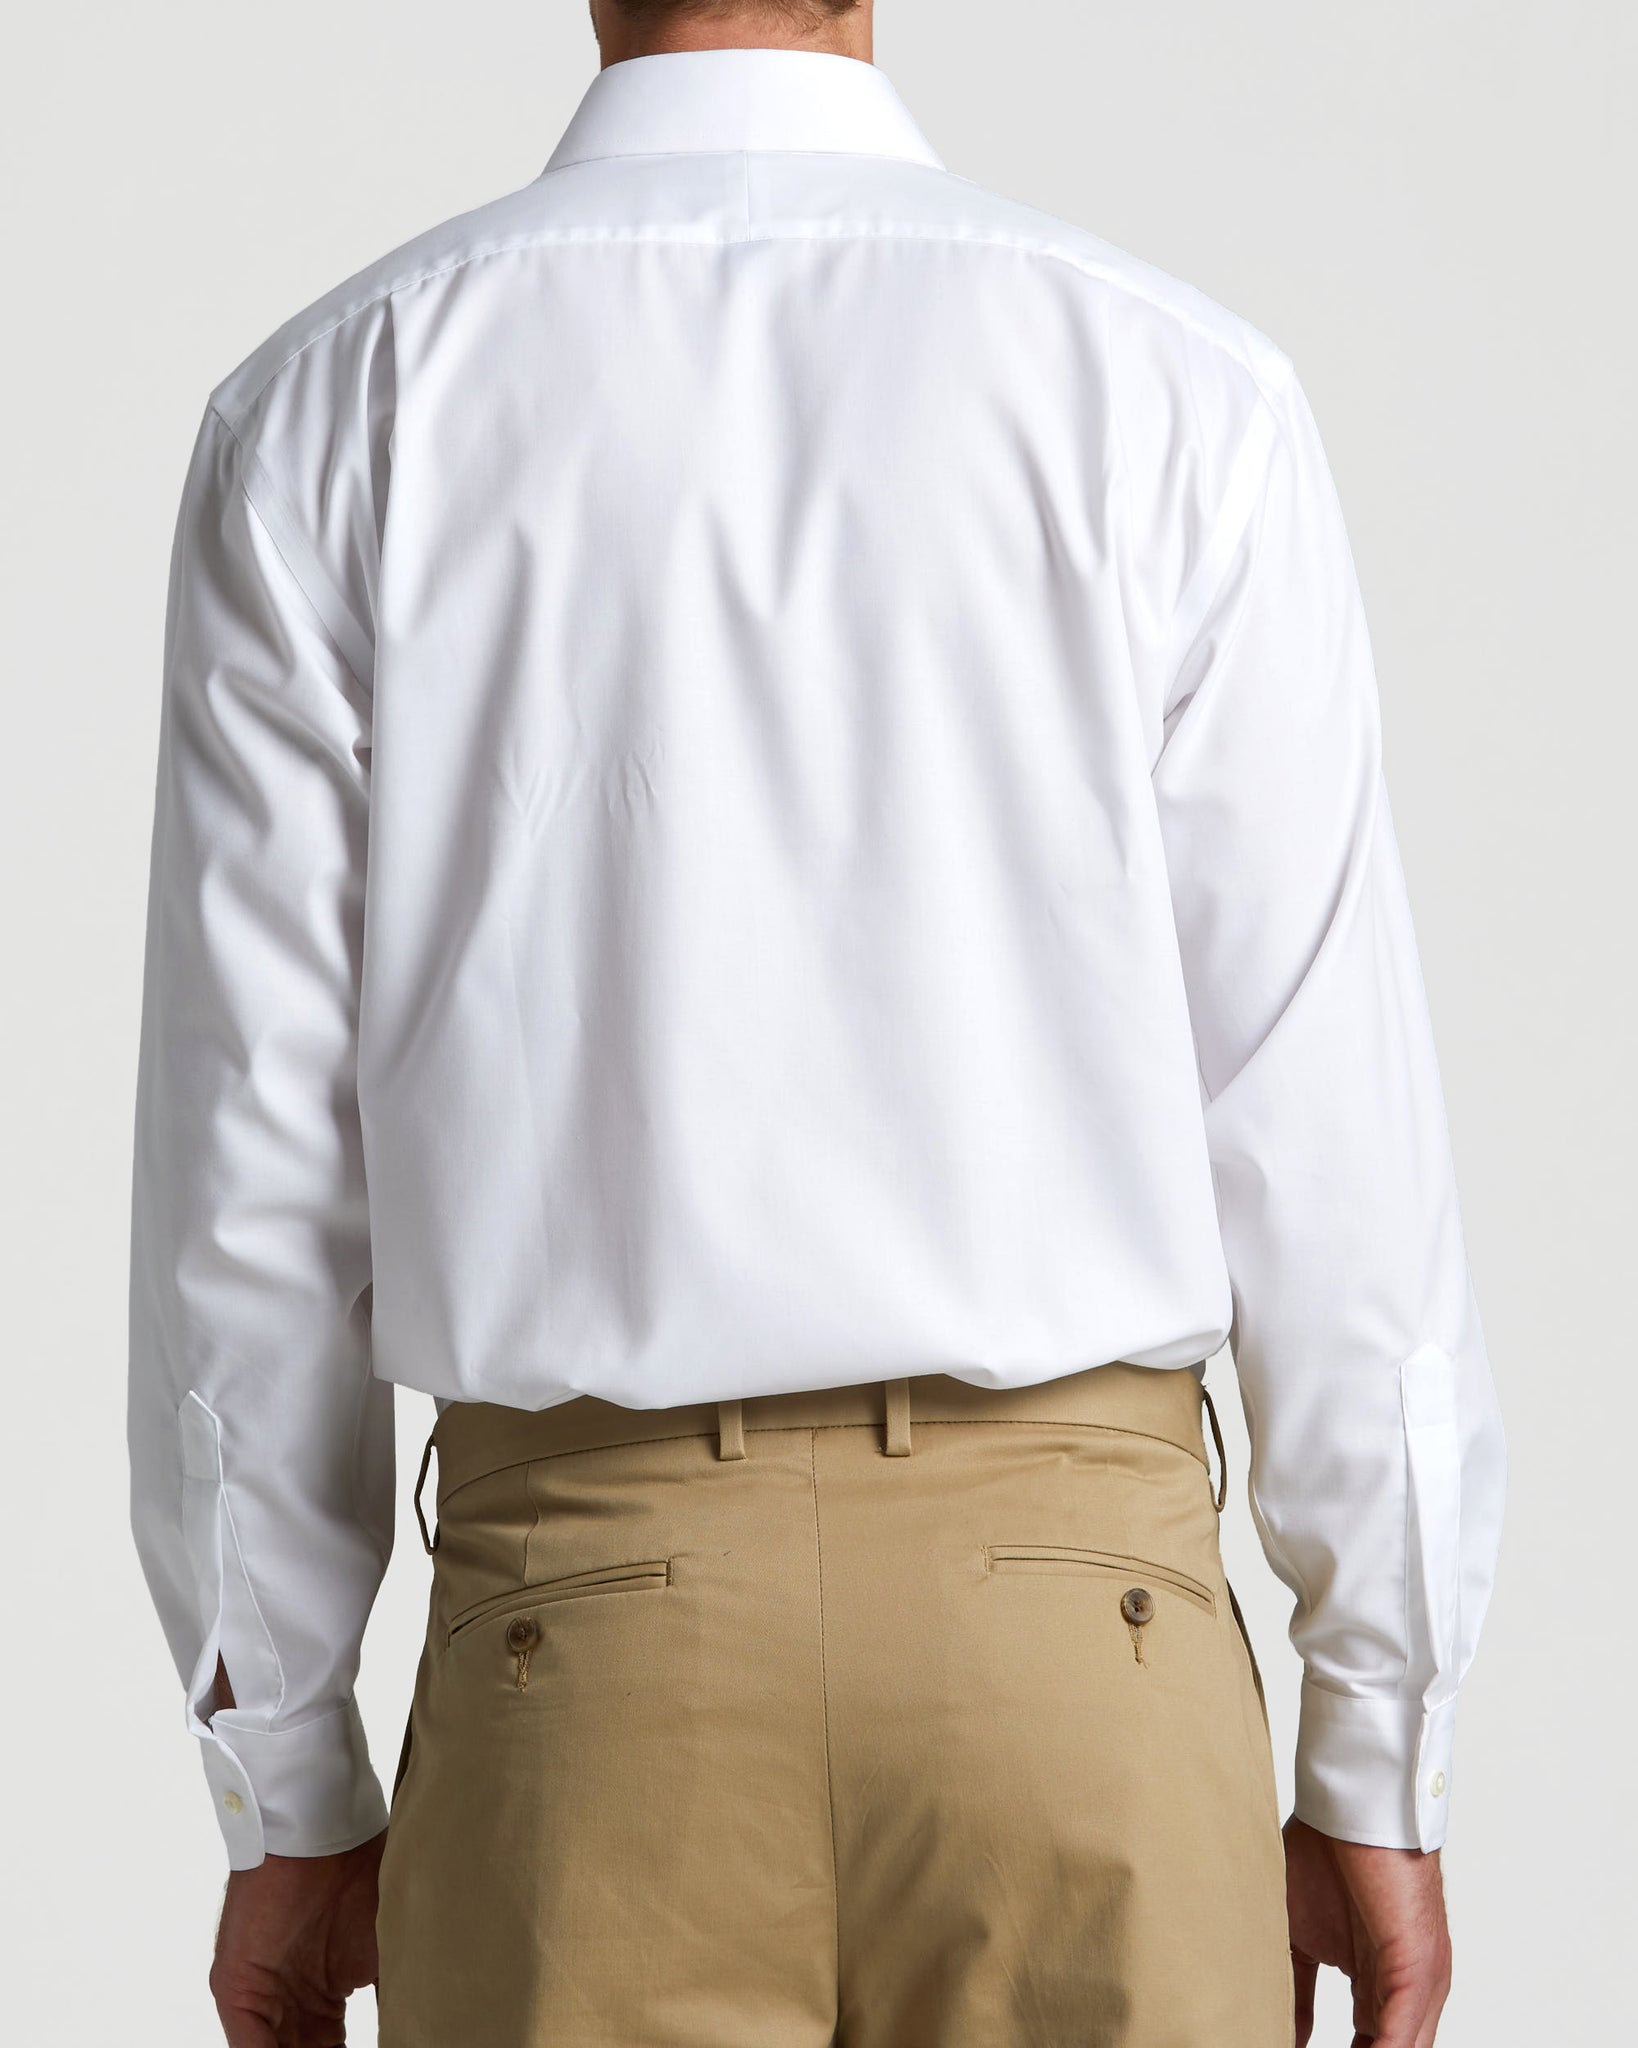 MagnaClick Regular Fit Dress Shirt (Mens) - White